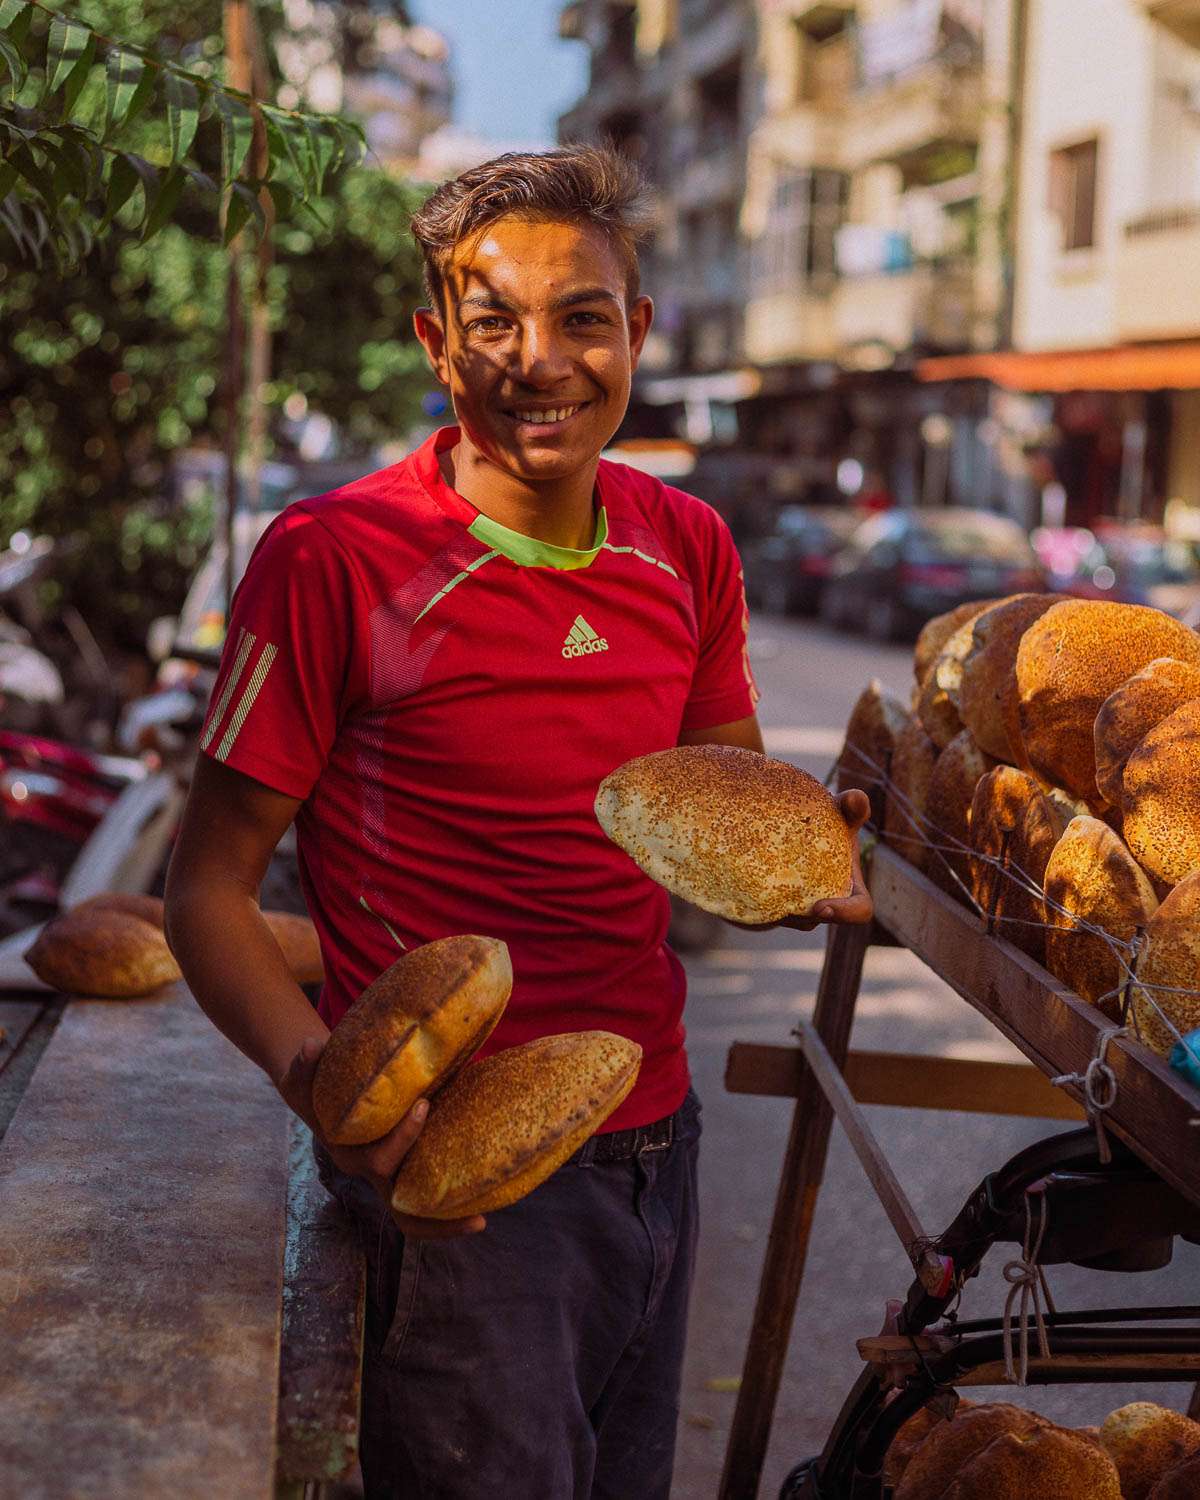 Rachel Off Duty: A Ka'ak Vendor in Tripoli, Lebanon